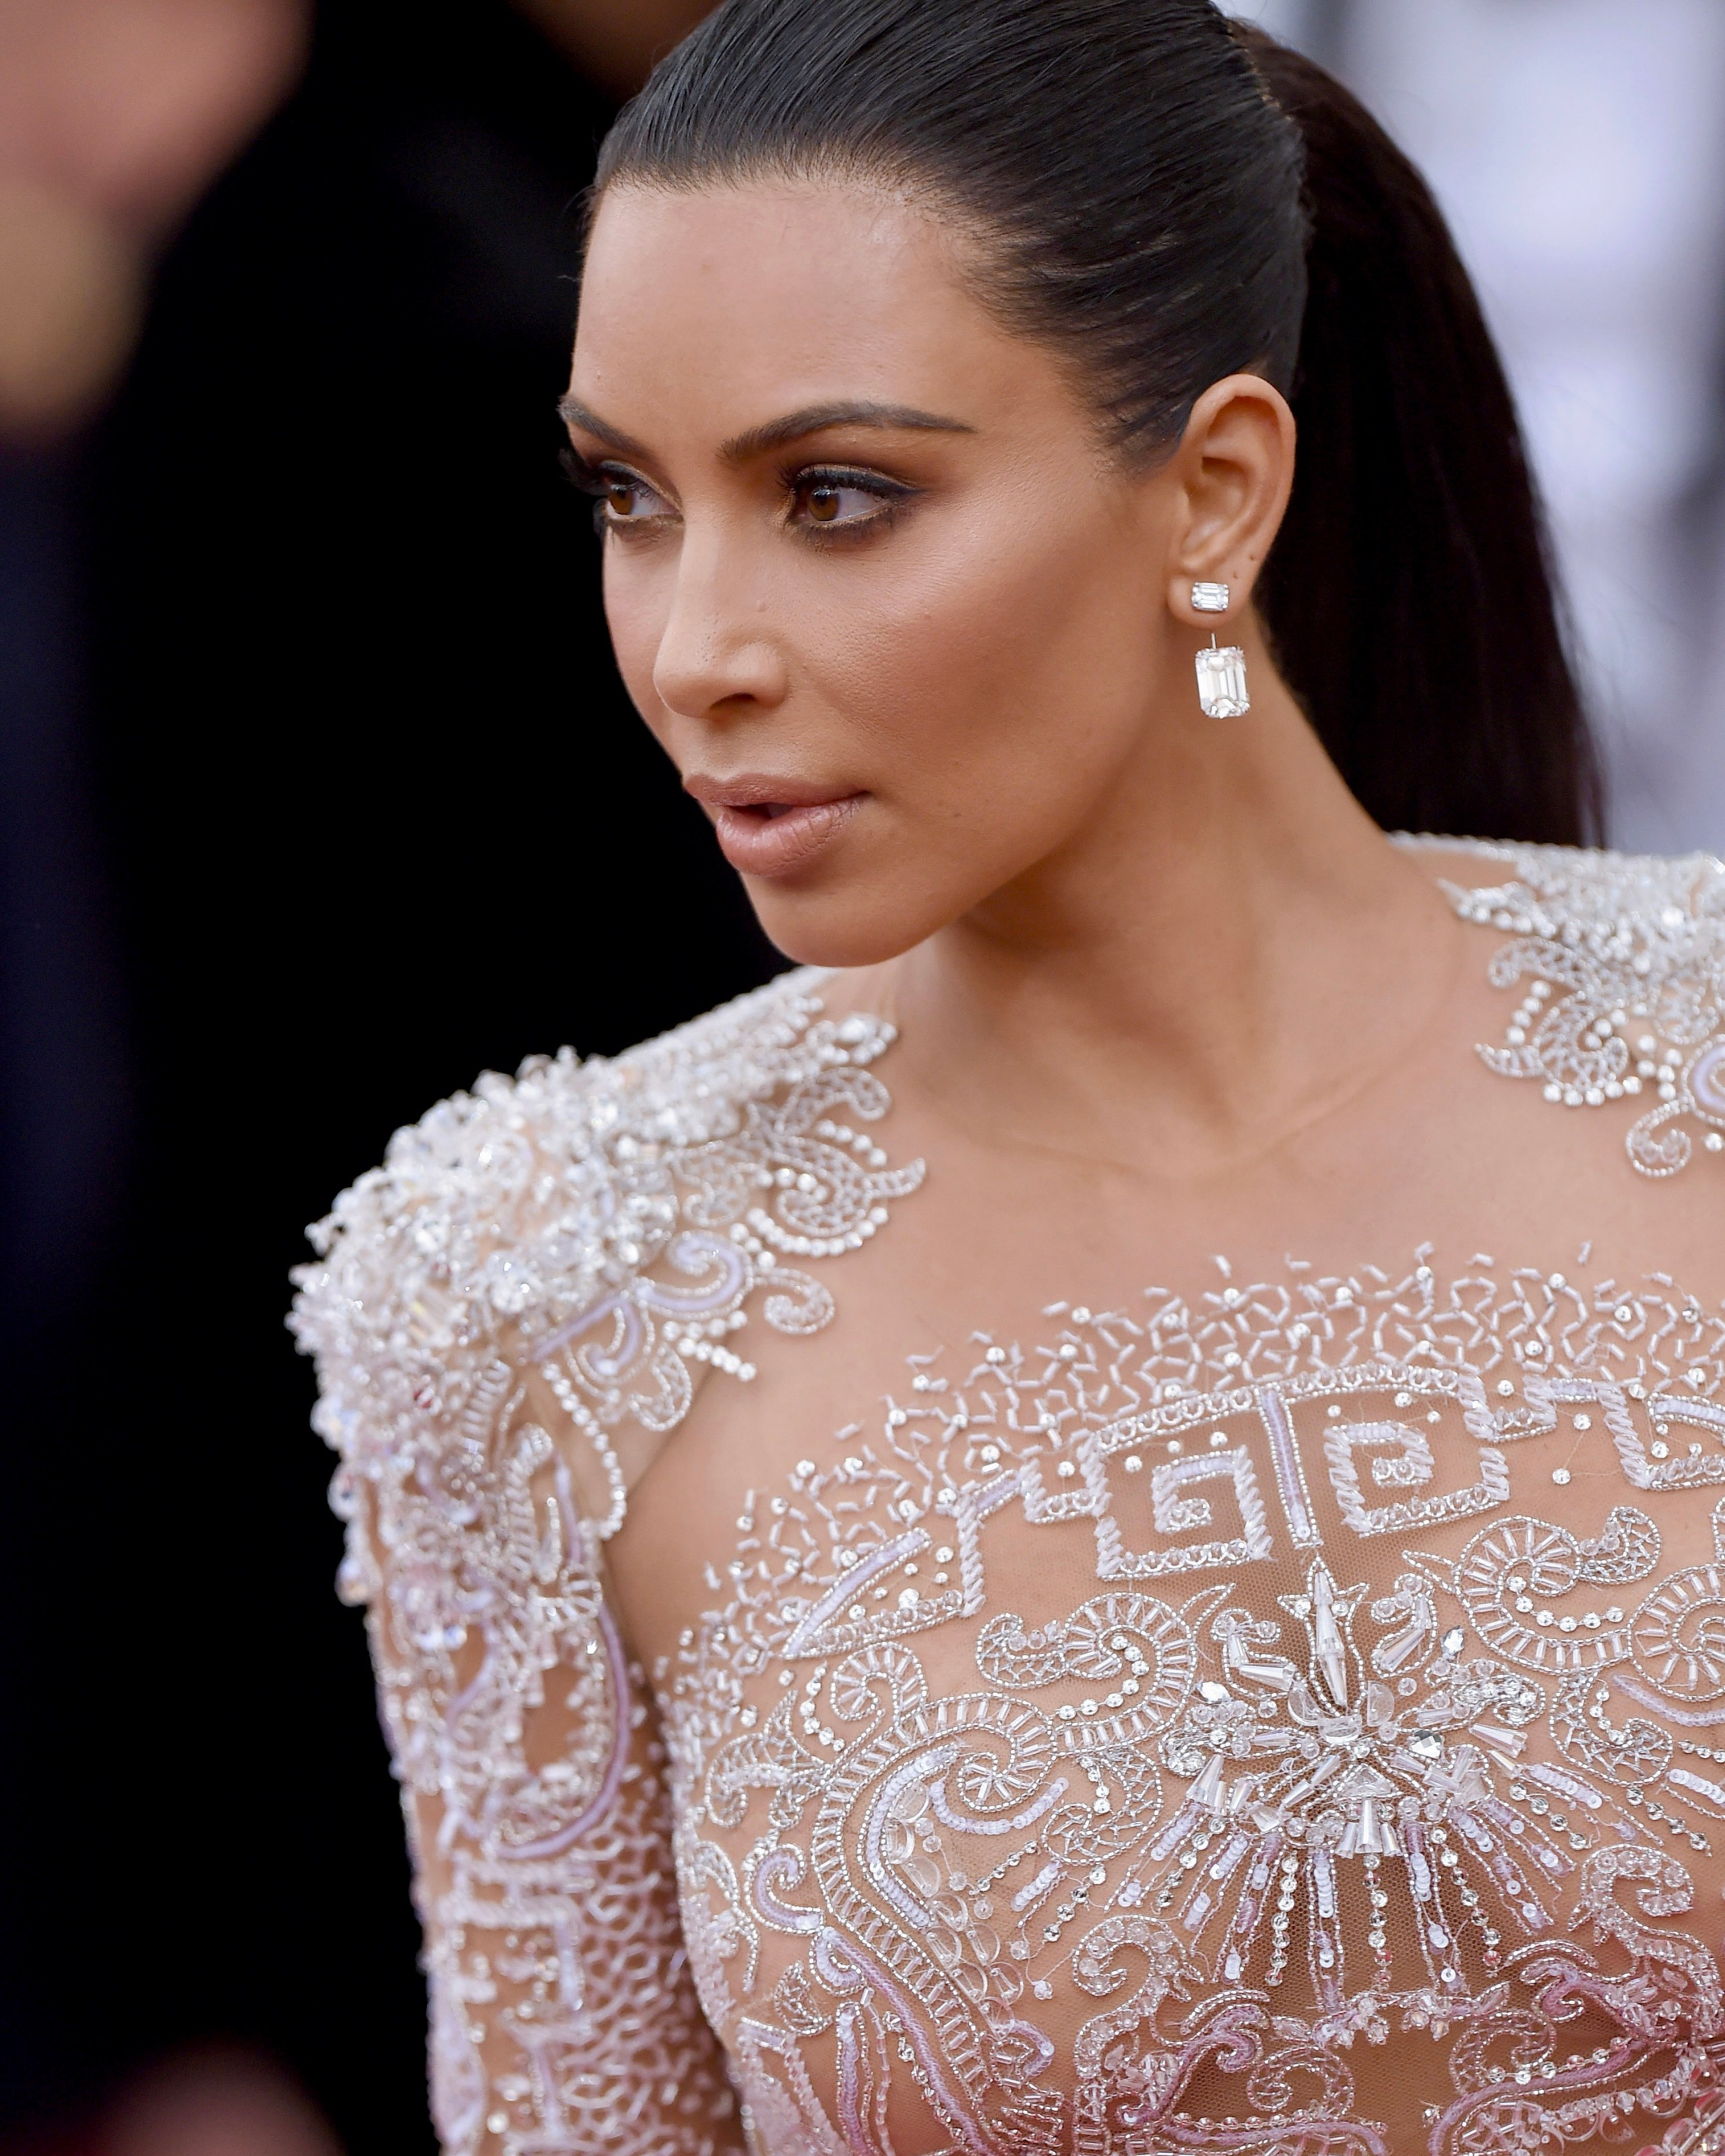 Kim Kardashian shined in natural diamond jewelry at the 2015 Met Gala.